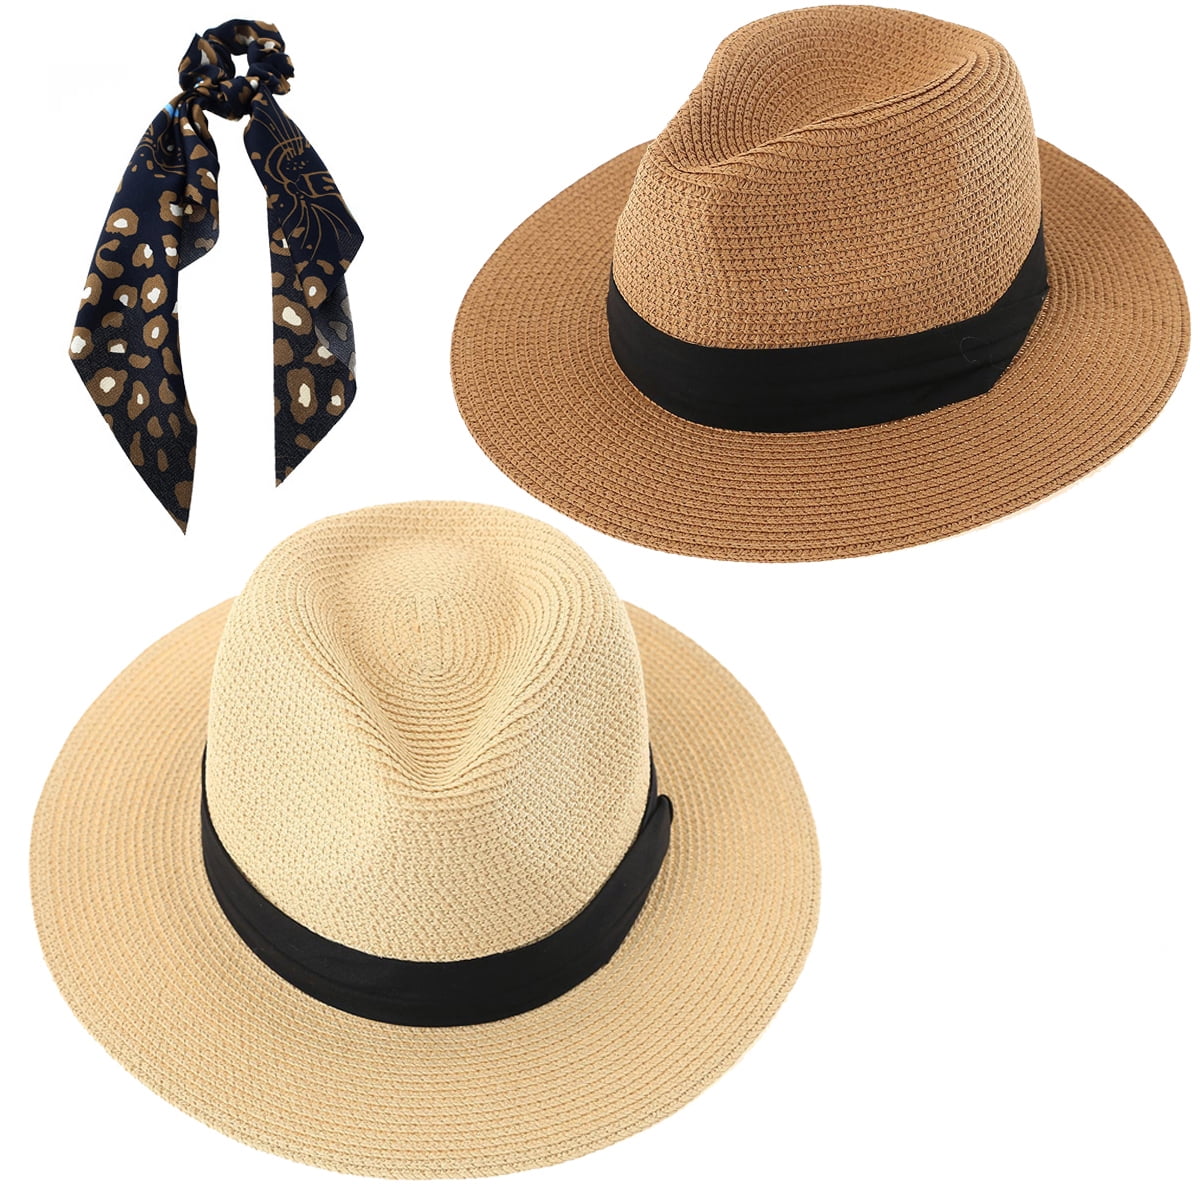 hat for men classic fedora design handmade hat beach hat Fedora hat hat for women panama hat navy-red band straw hat small brim hat